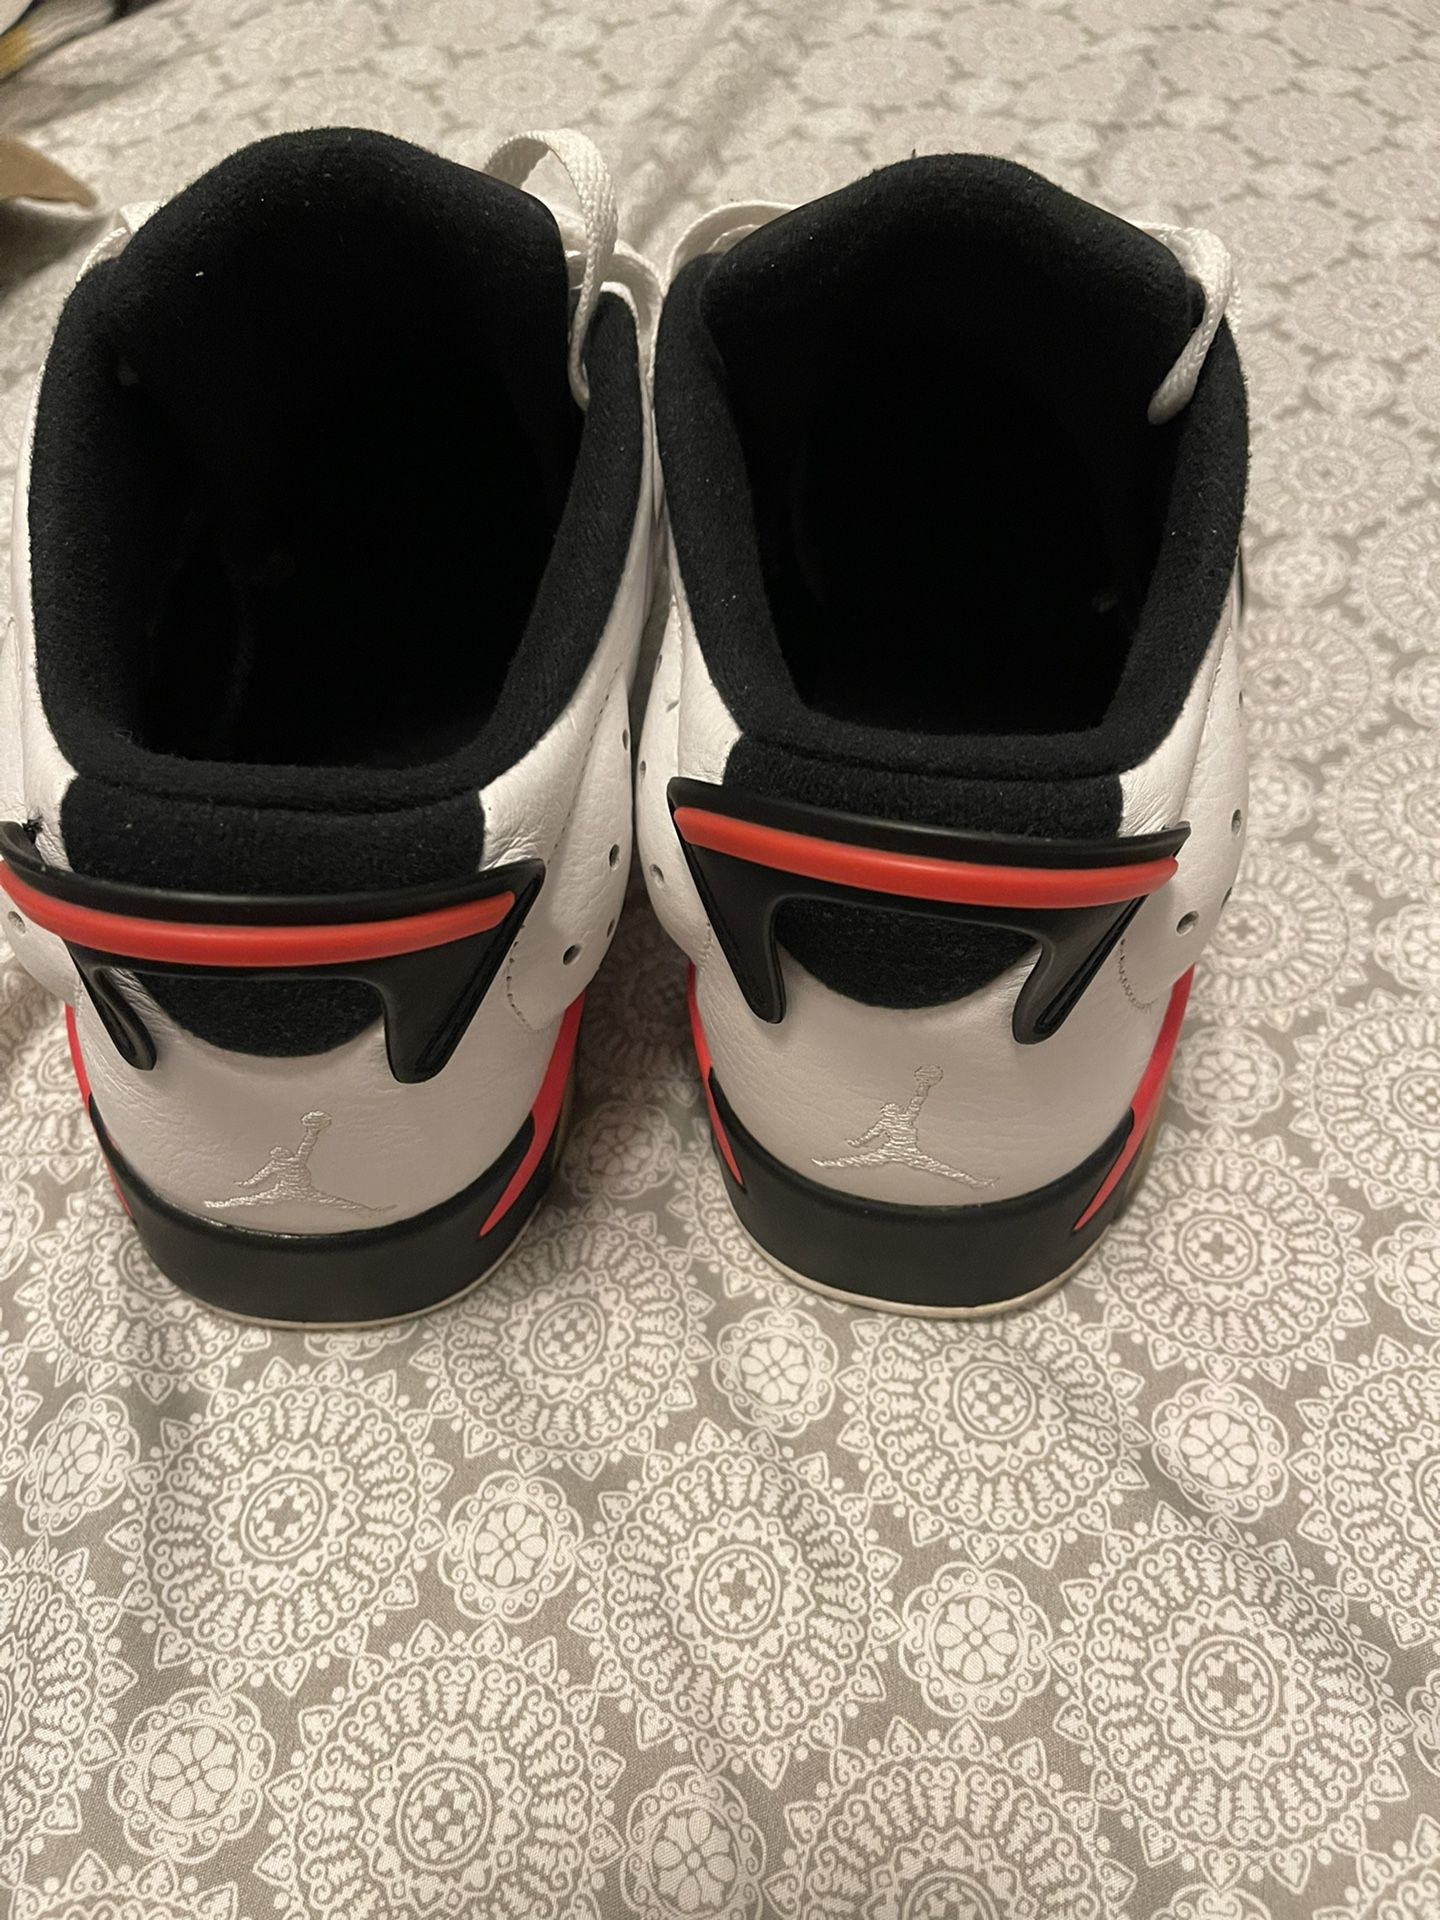 Jordans Size 12 for Sale in Fresno, CA - OfferUp